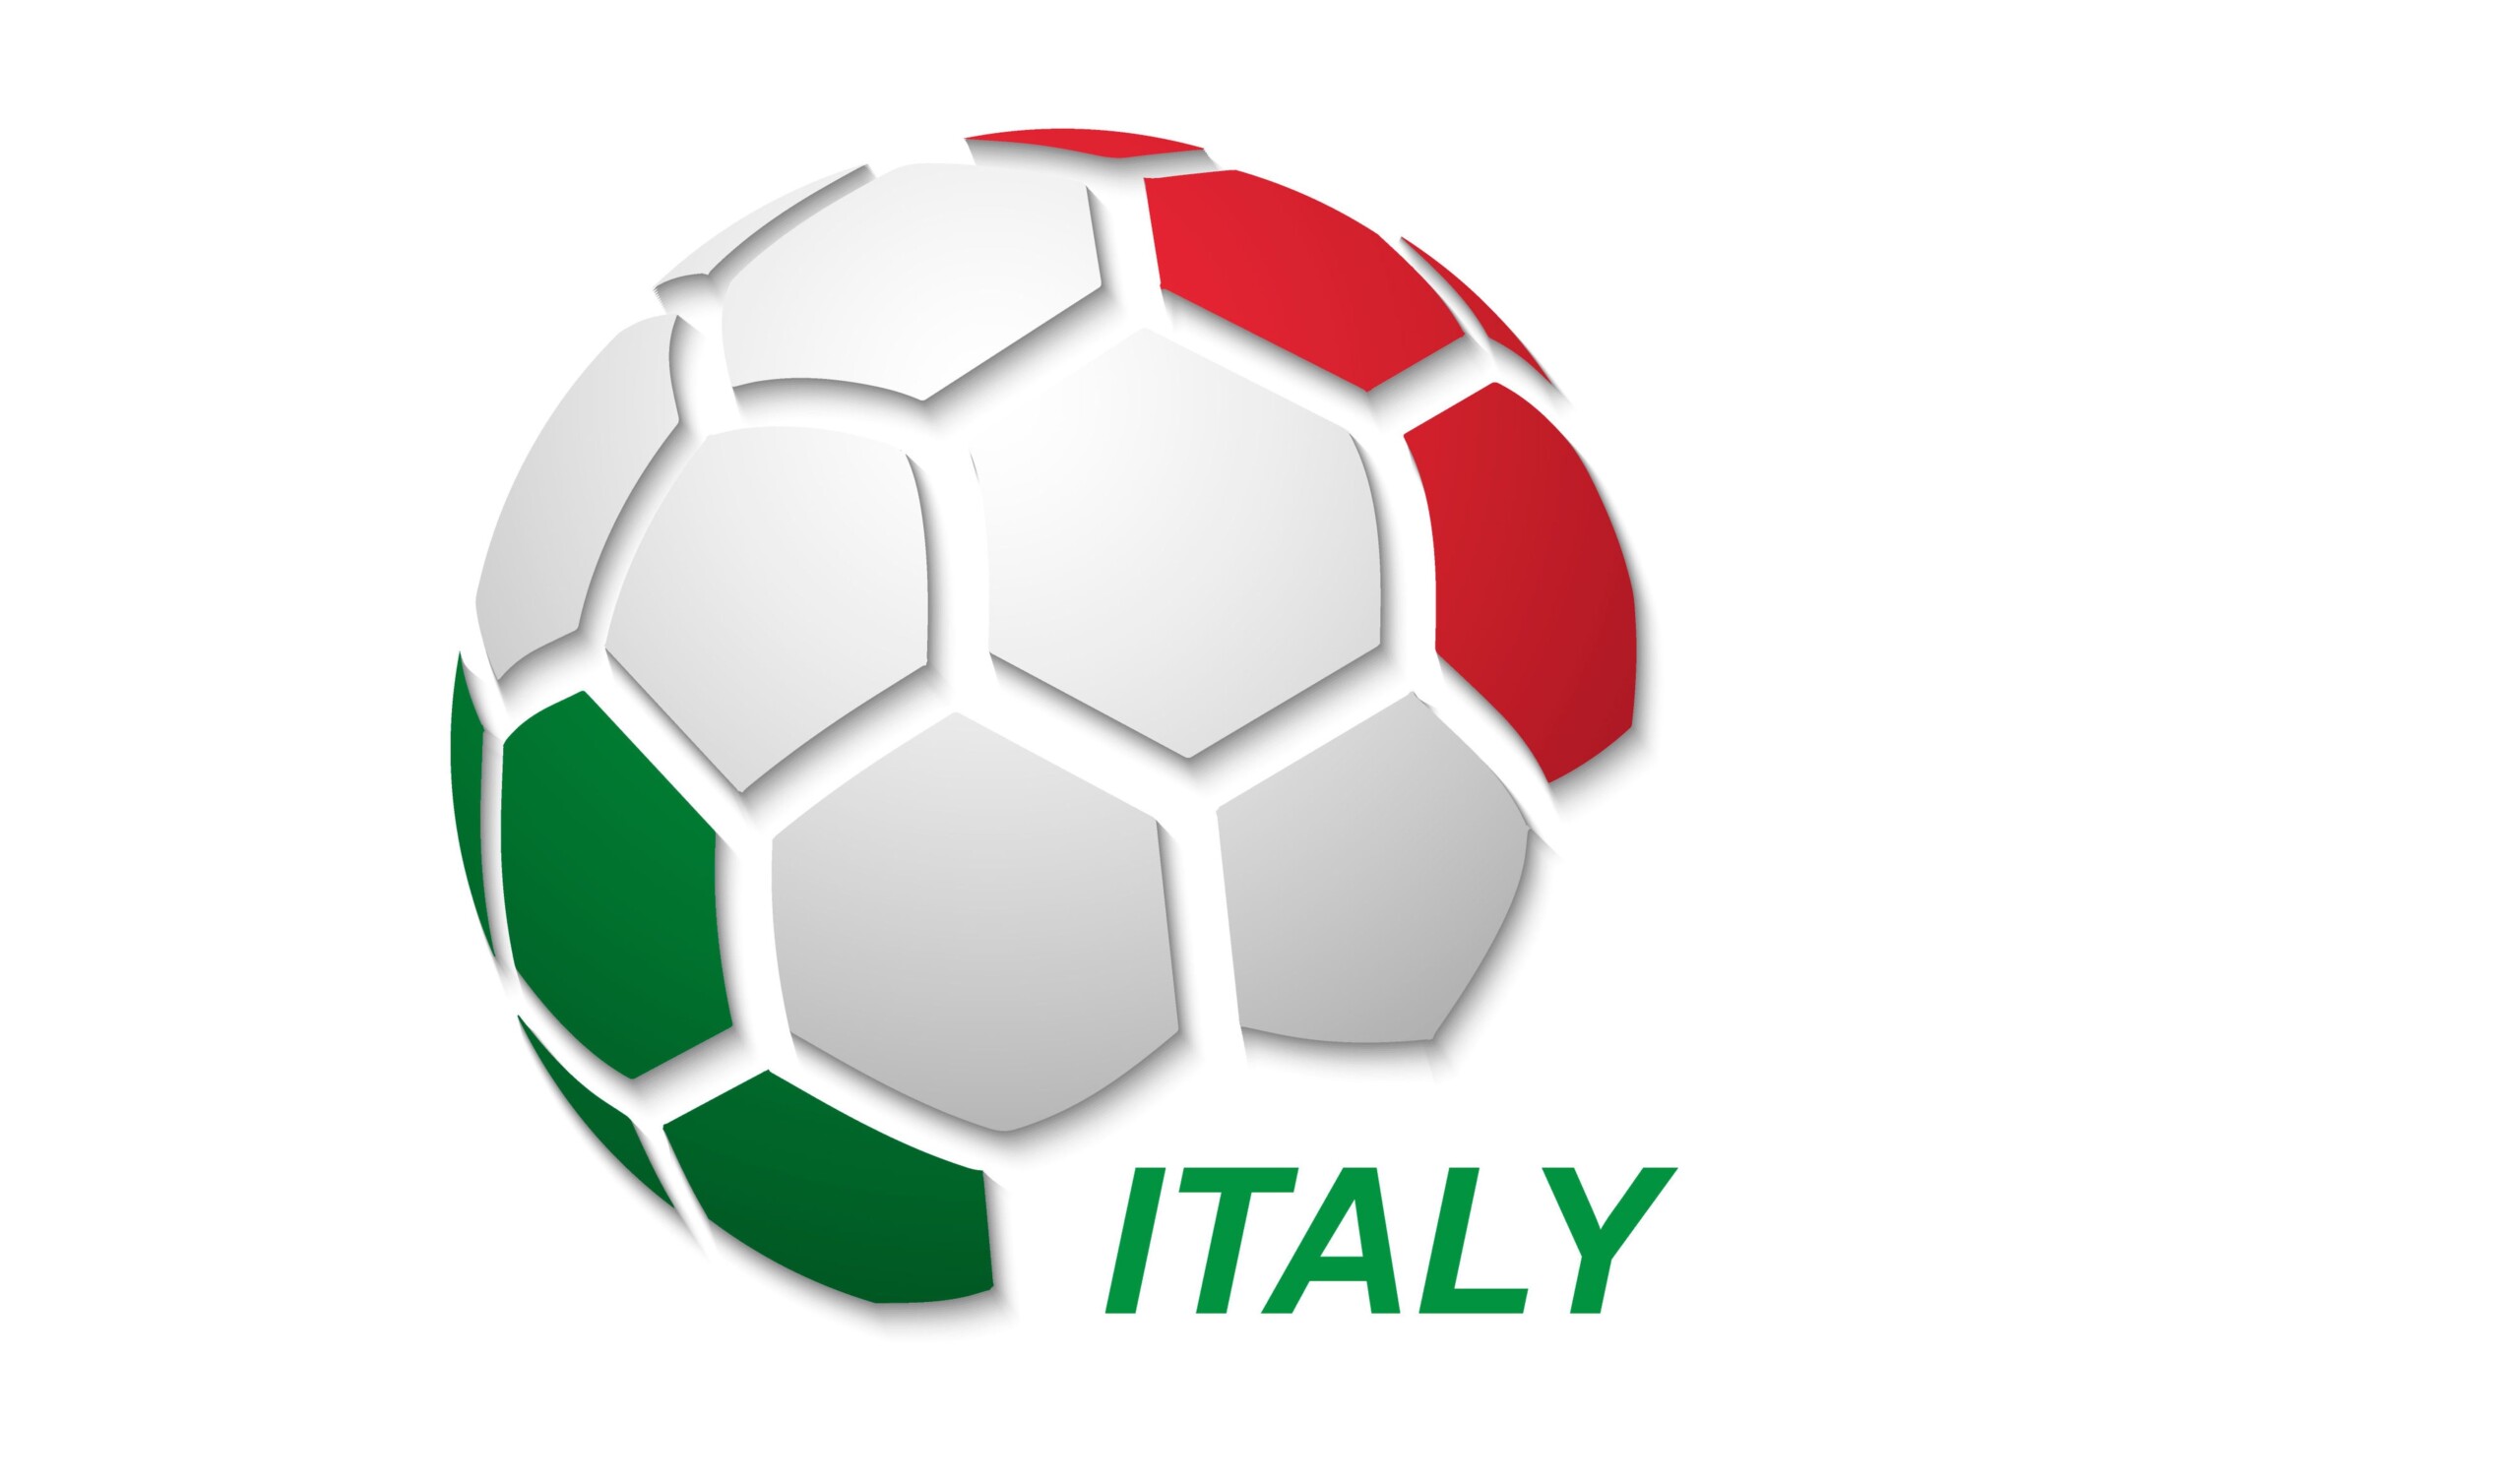 Historical Italian Professional Football Club in Serie C